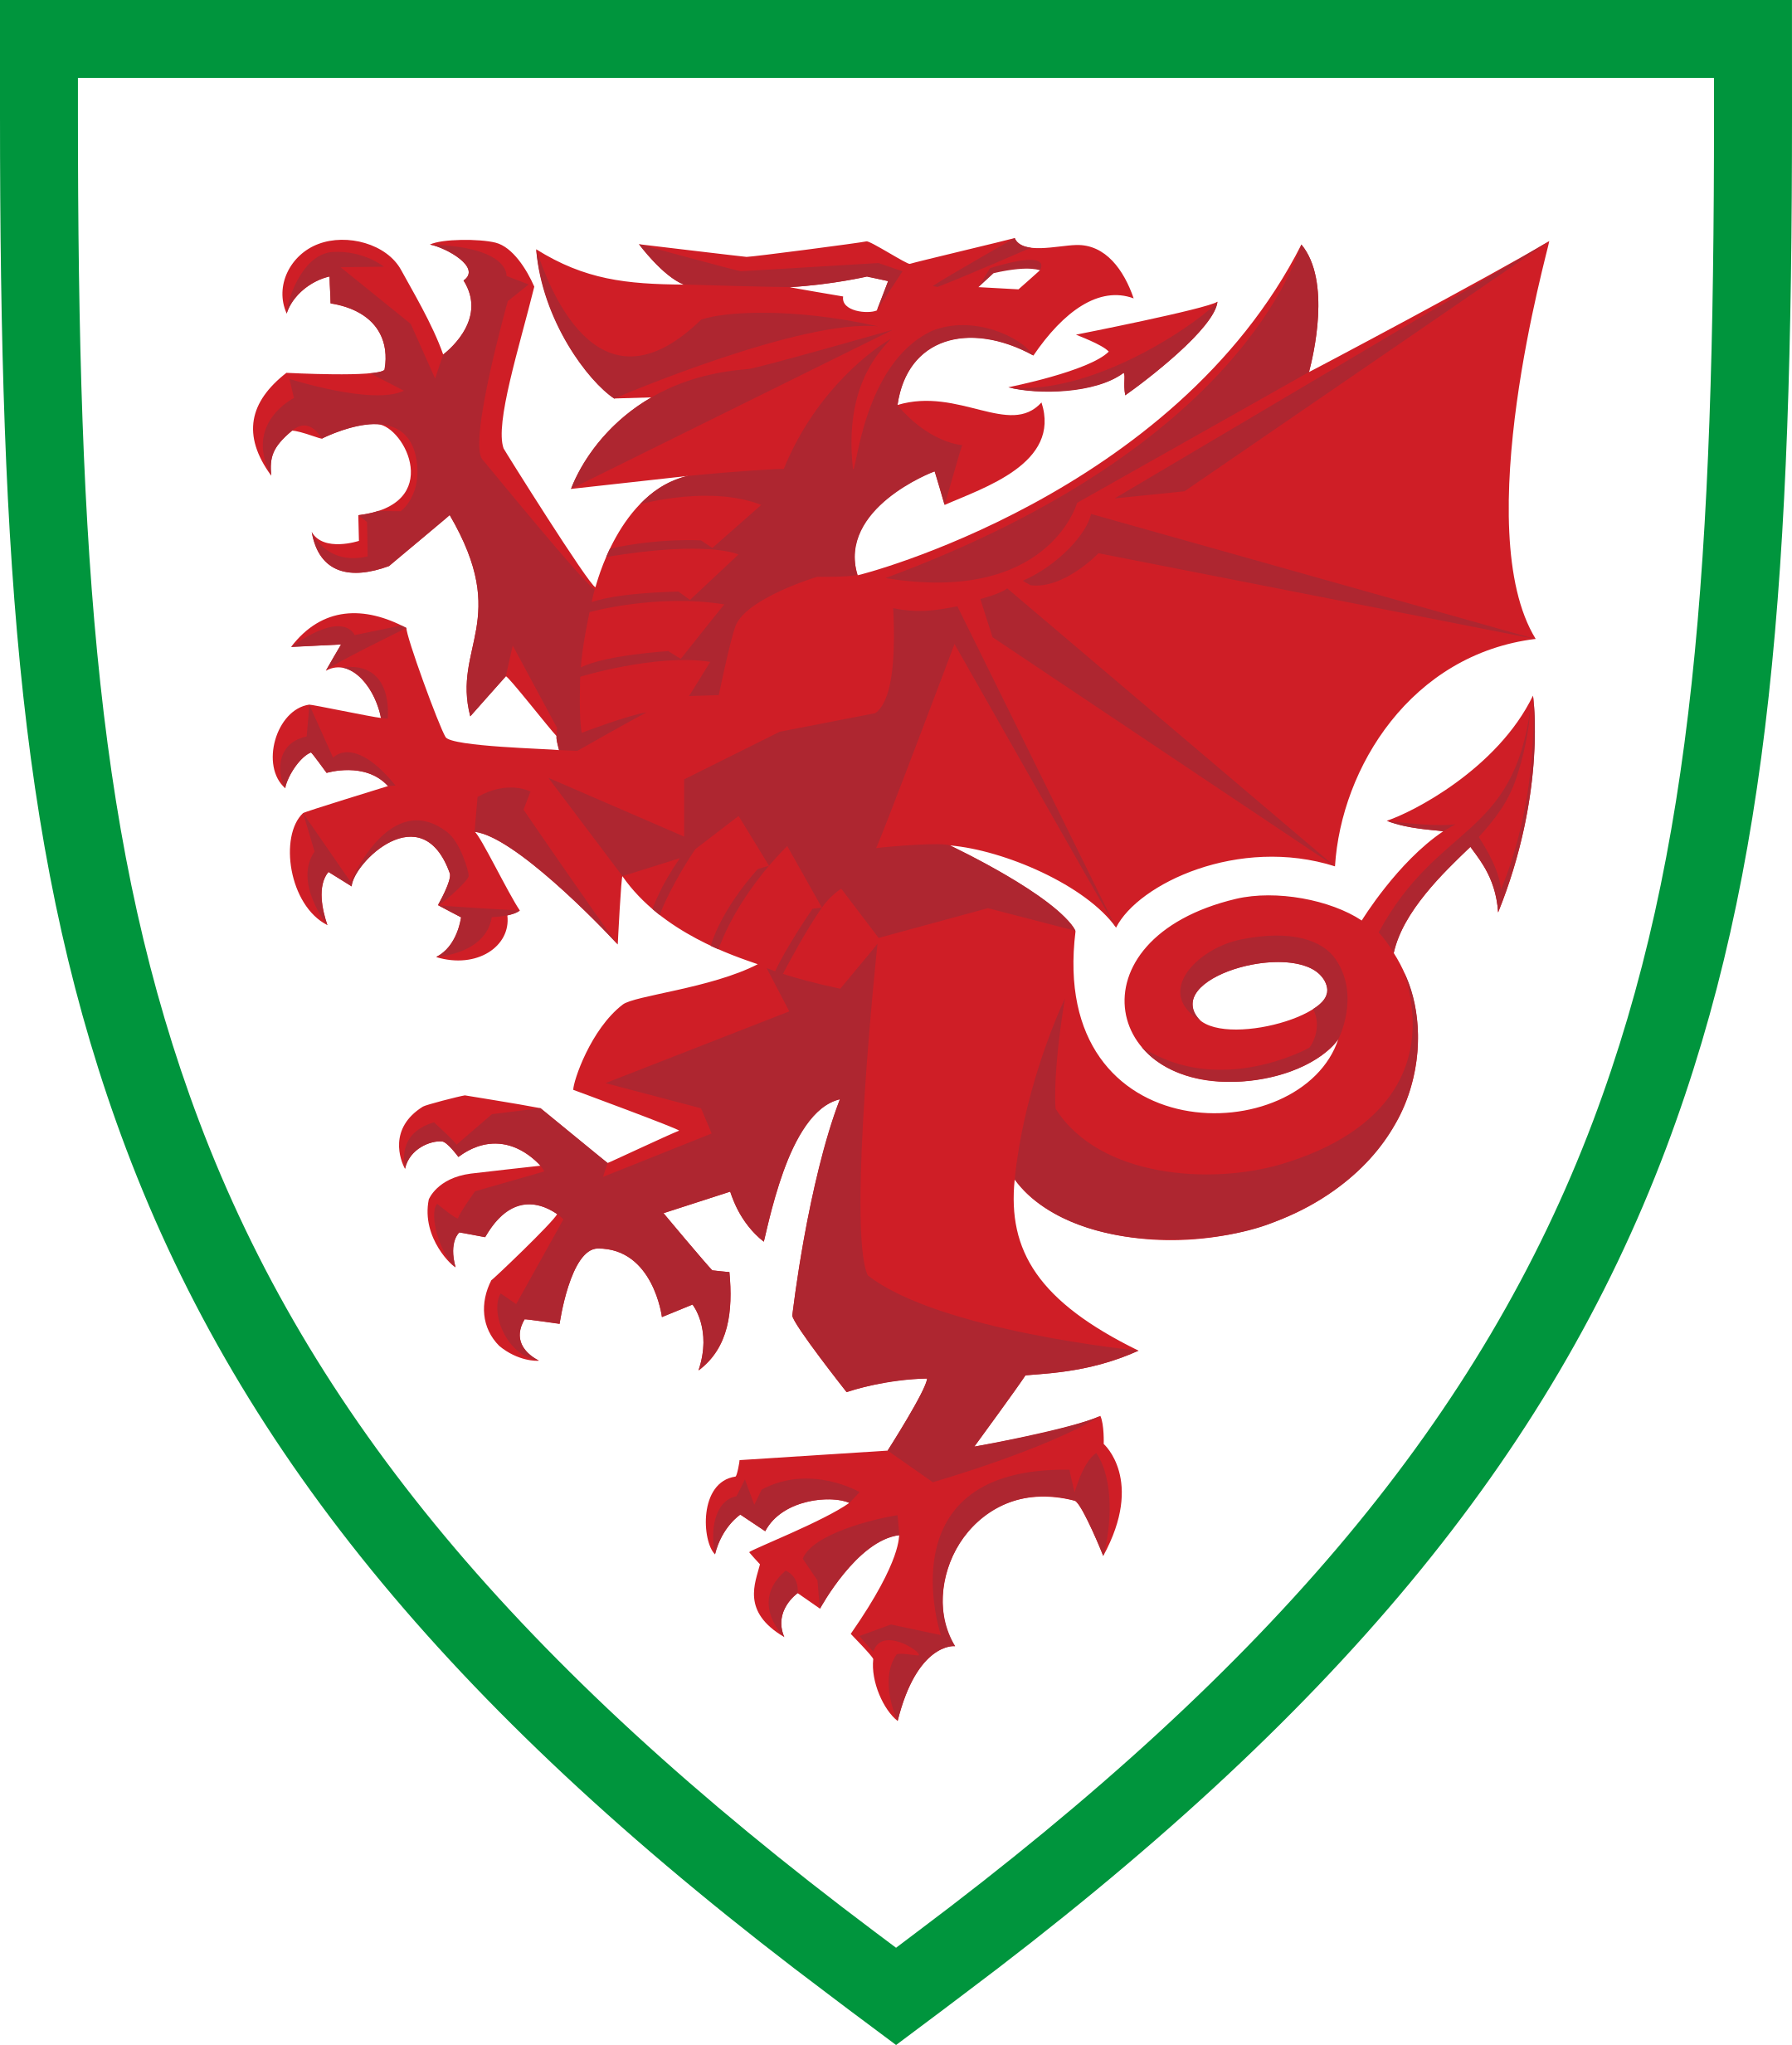 wales national football team logo 1 - Wales National Football Team Logo